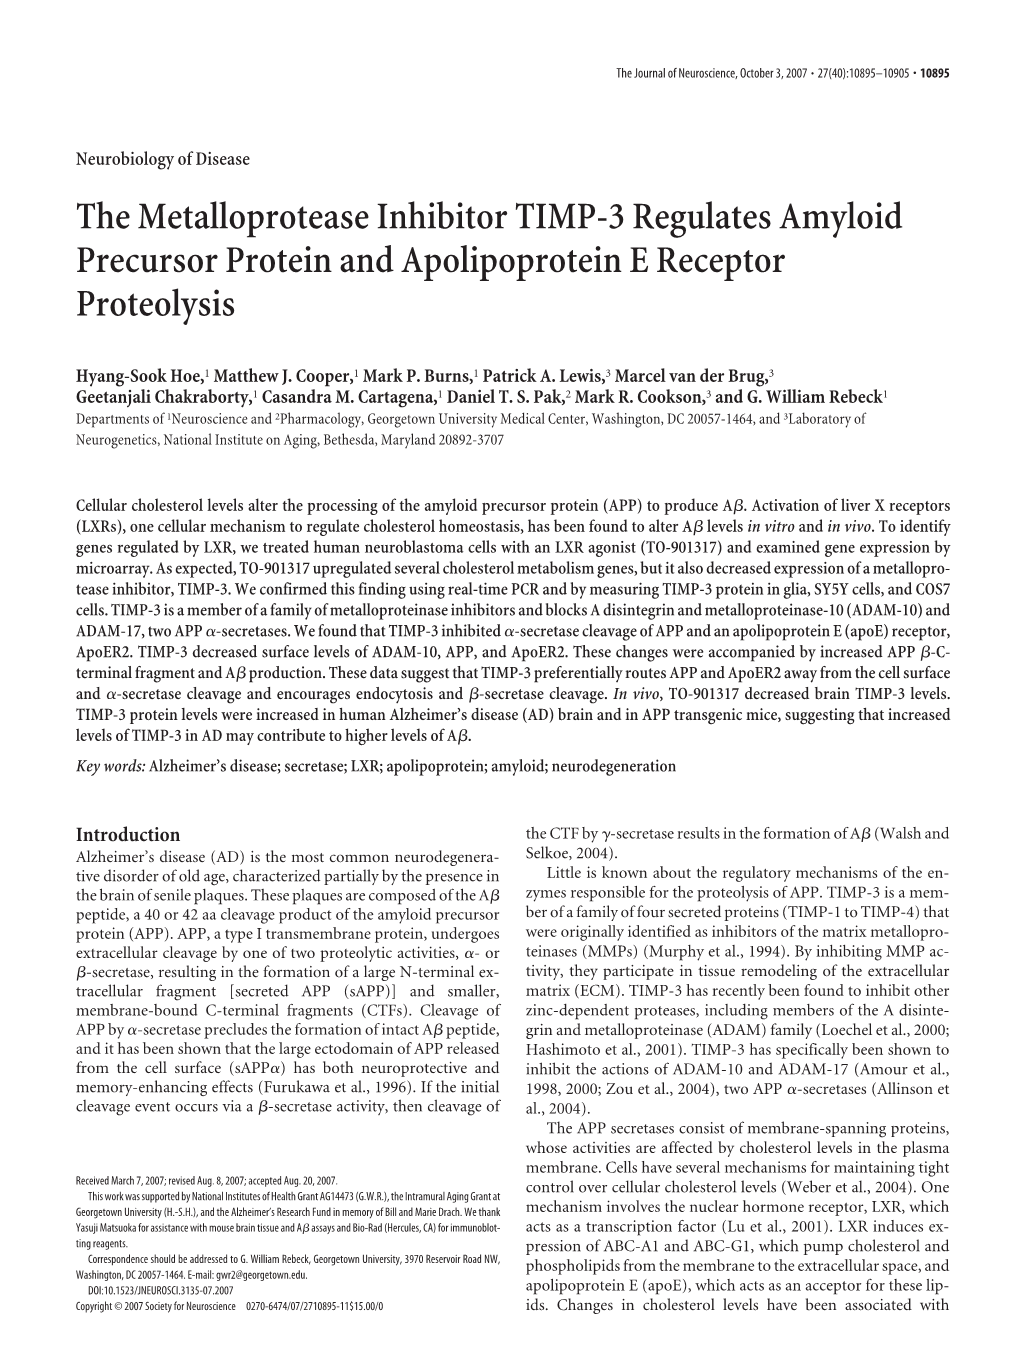 The Metalloprotease Inhibitor TIMP-3 Regulates Amyloid Precursor Protein and Apolipoprotein E Receptor Proteolysis